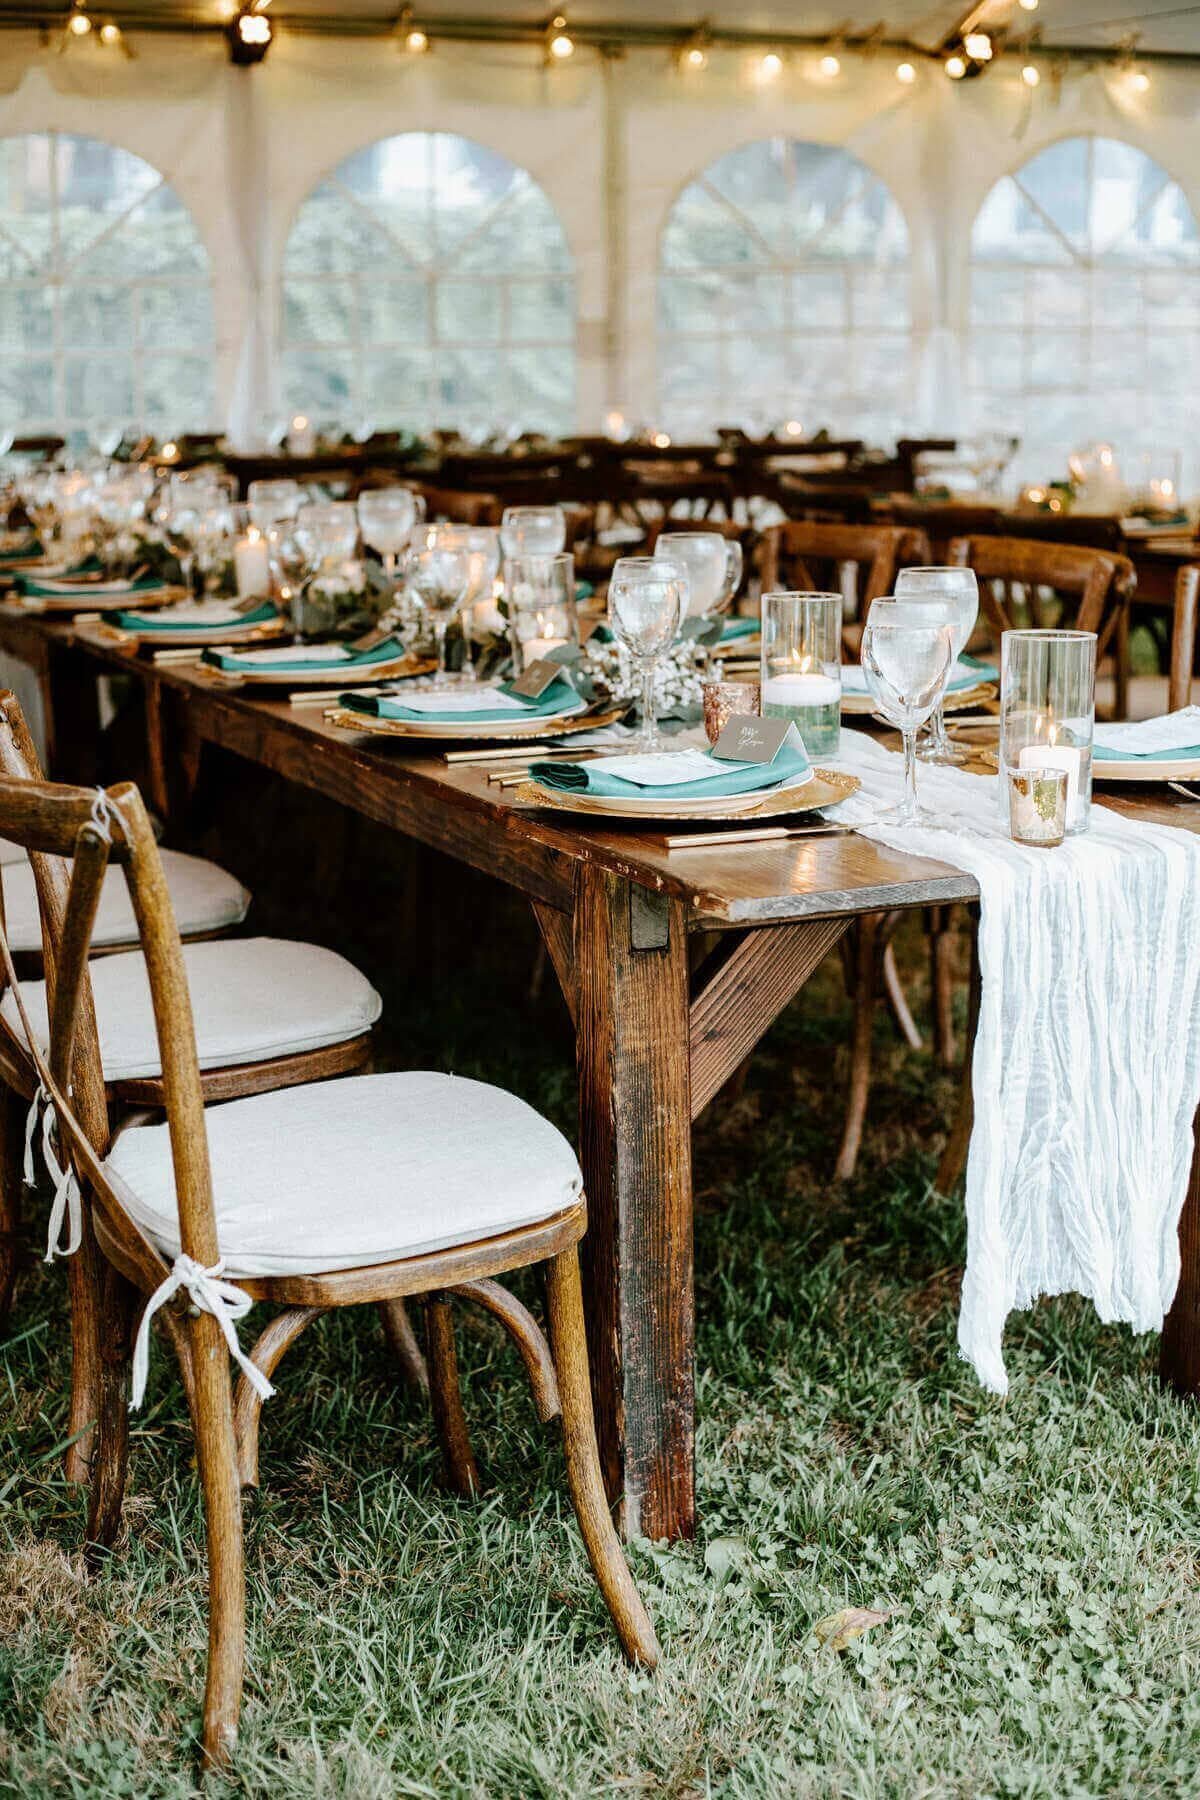 21-kara-loryn-photography-wedding-guest-table-setting